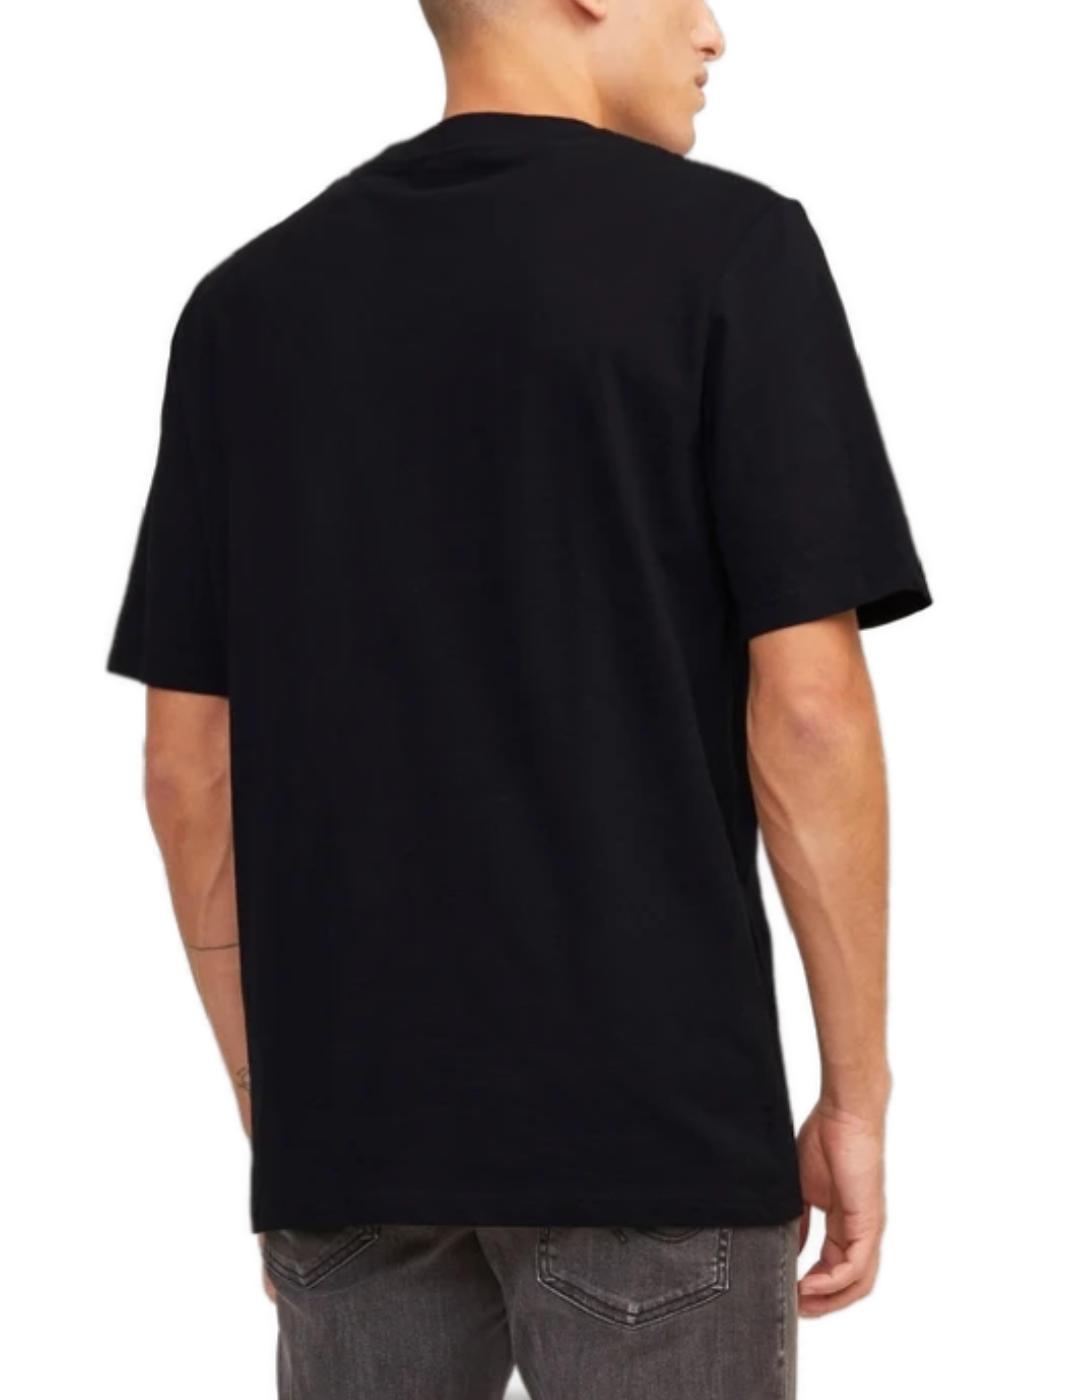 Camiseta Jack&Jones Lafayette negra manga corta de hombre